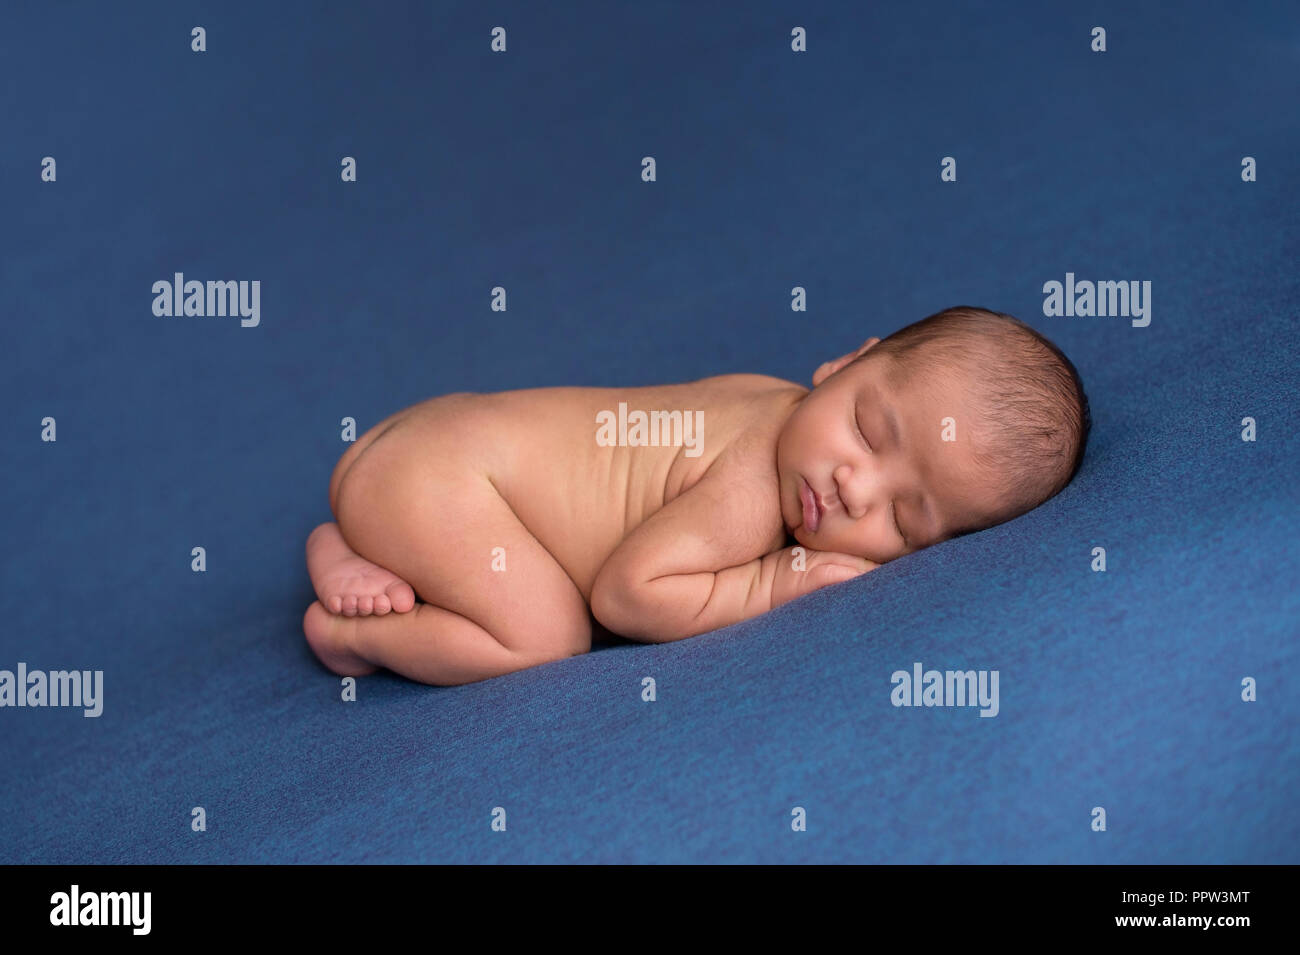 Nine day old newborn baby boy sleeping on his stomach. Shot in the studio on denim blue fabric. Stock Photo